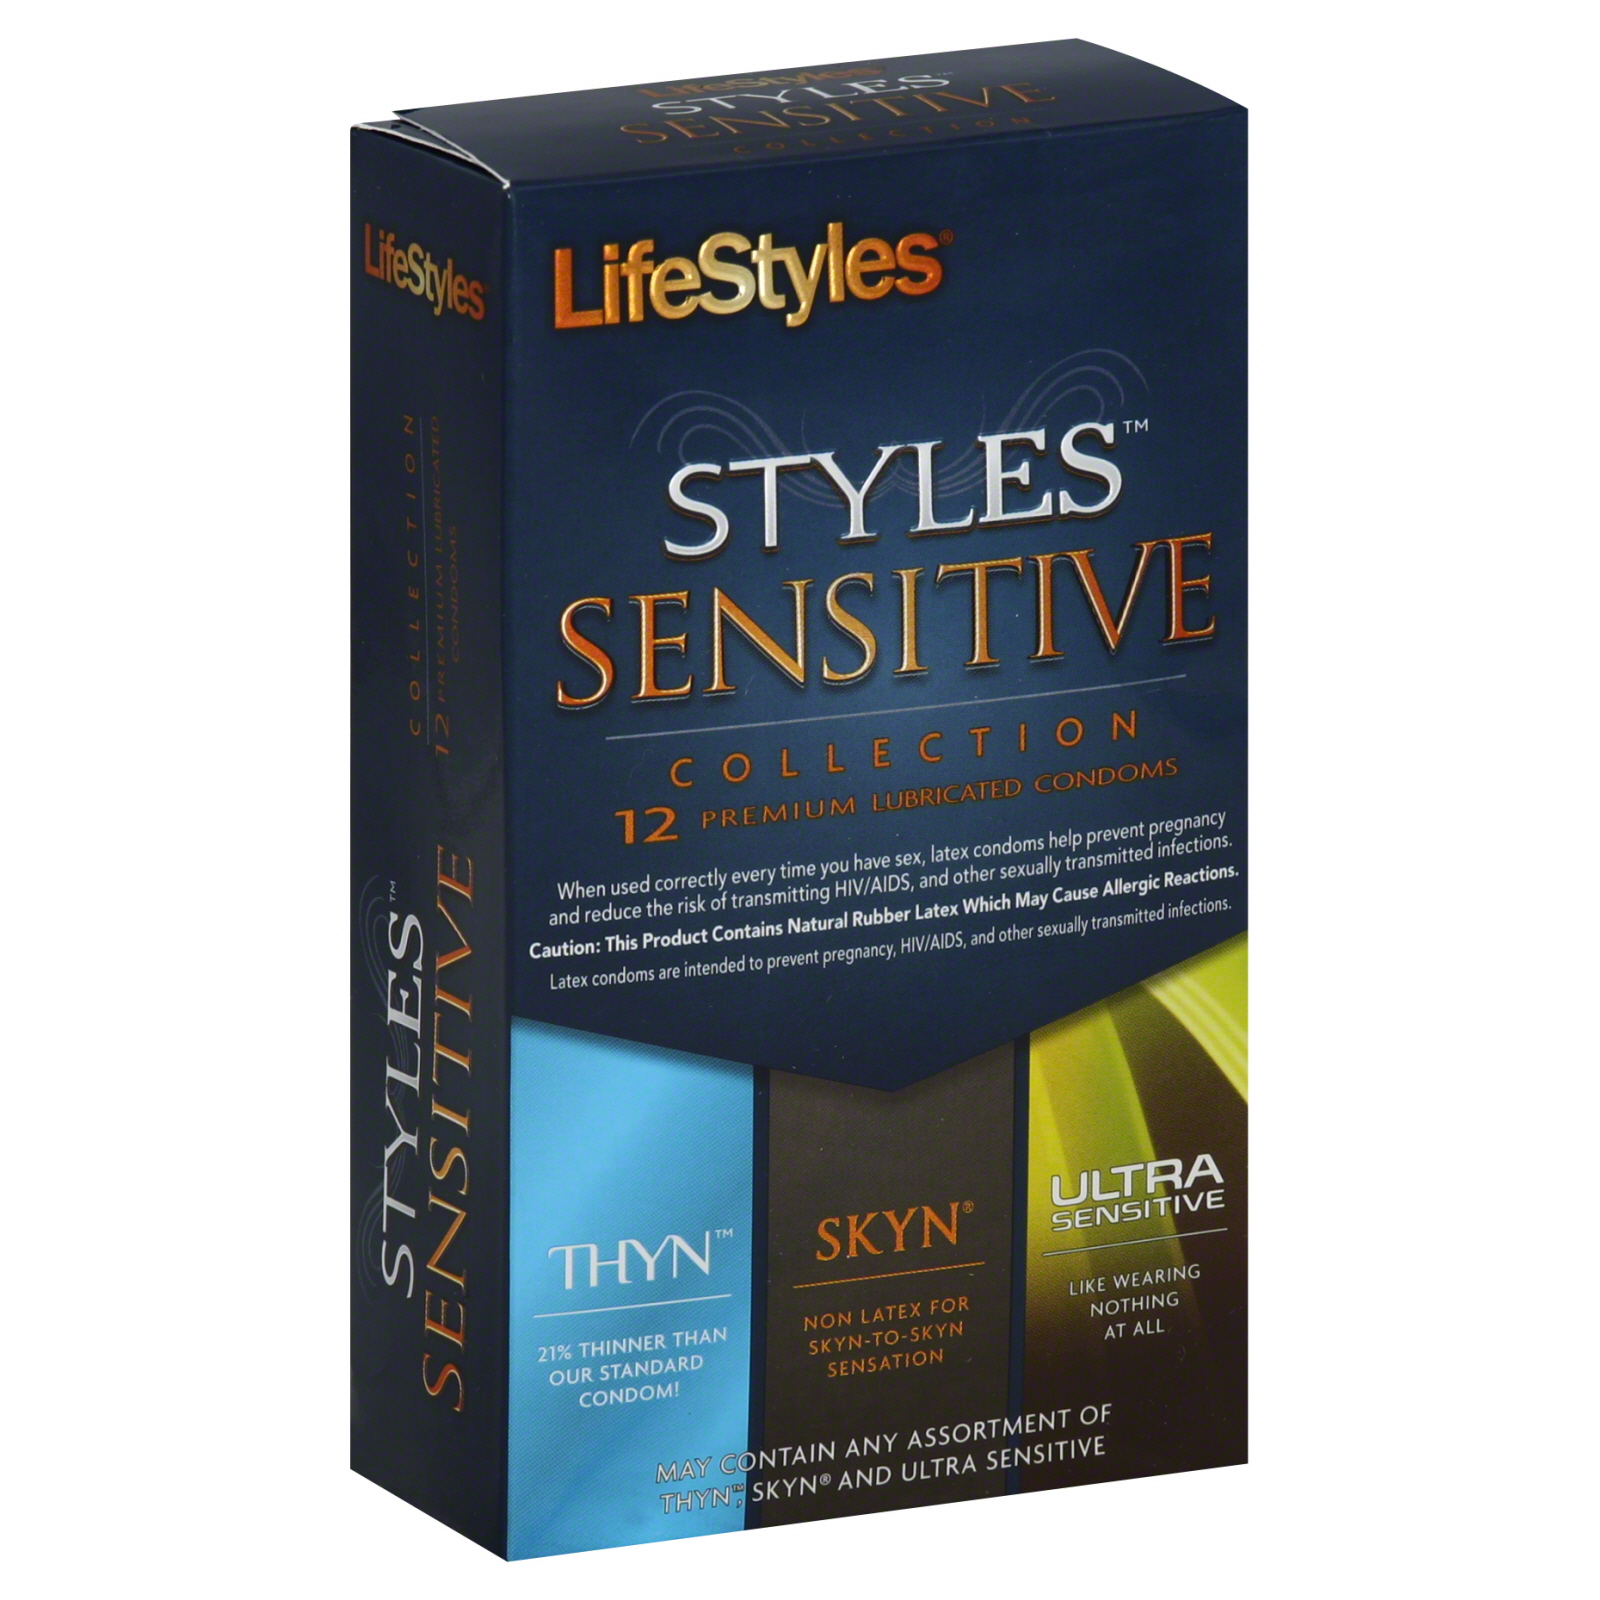 LifeStyles  Condoms, Premium Lubricated, Sensitive Collection, Thyn, Skyn, Ultra Sensitive, 12 condoms